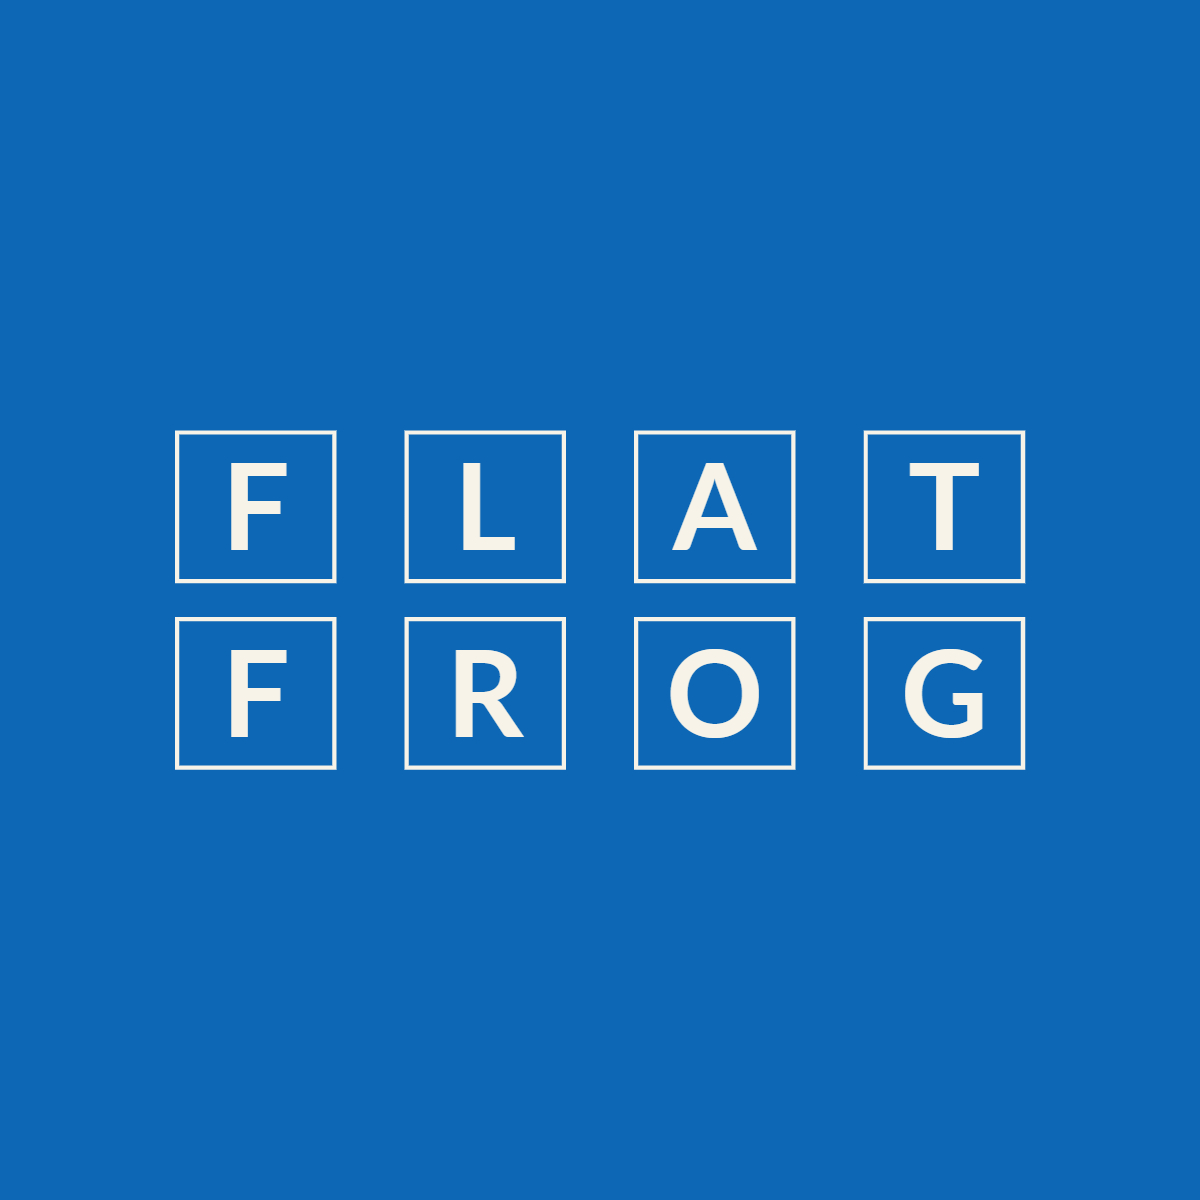 Flat Frog